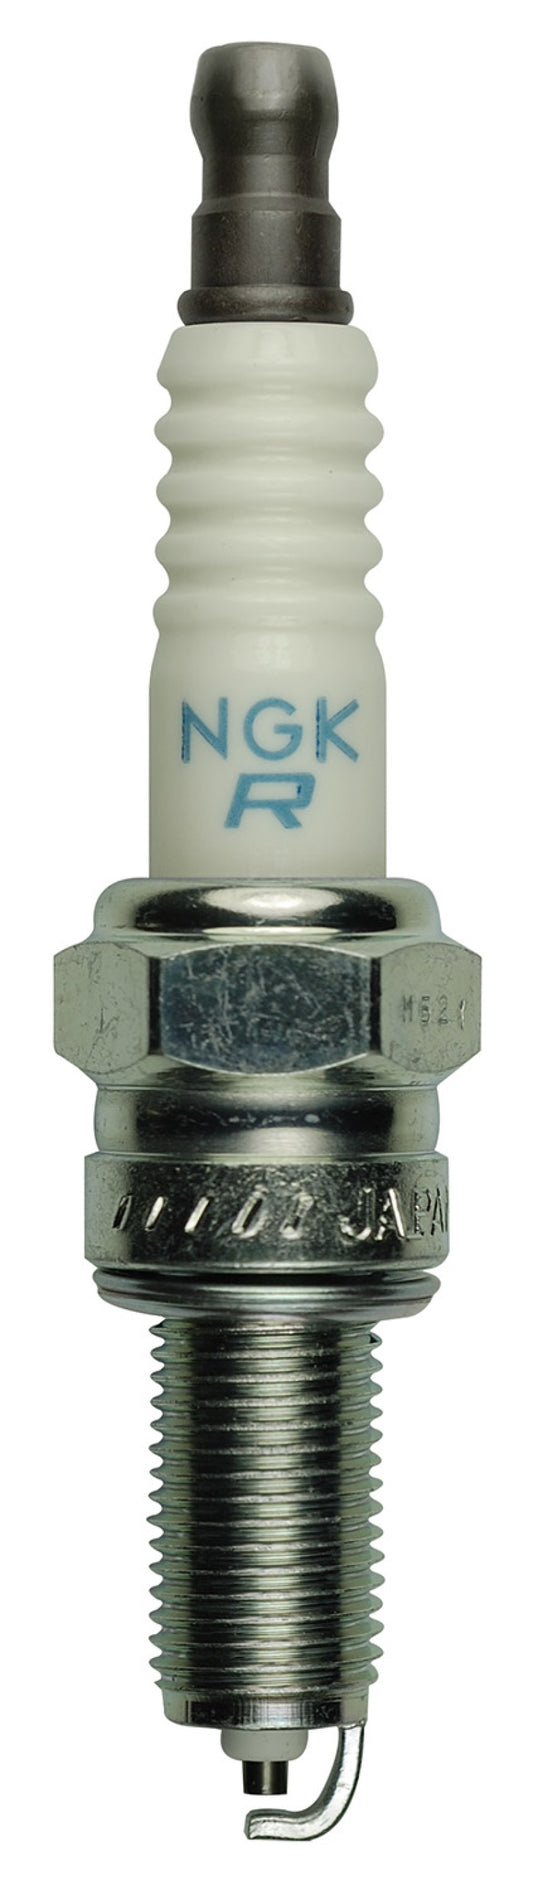 NGK Standard Spark Plug Box of 10 (MR8F)